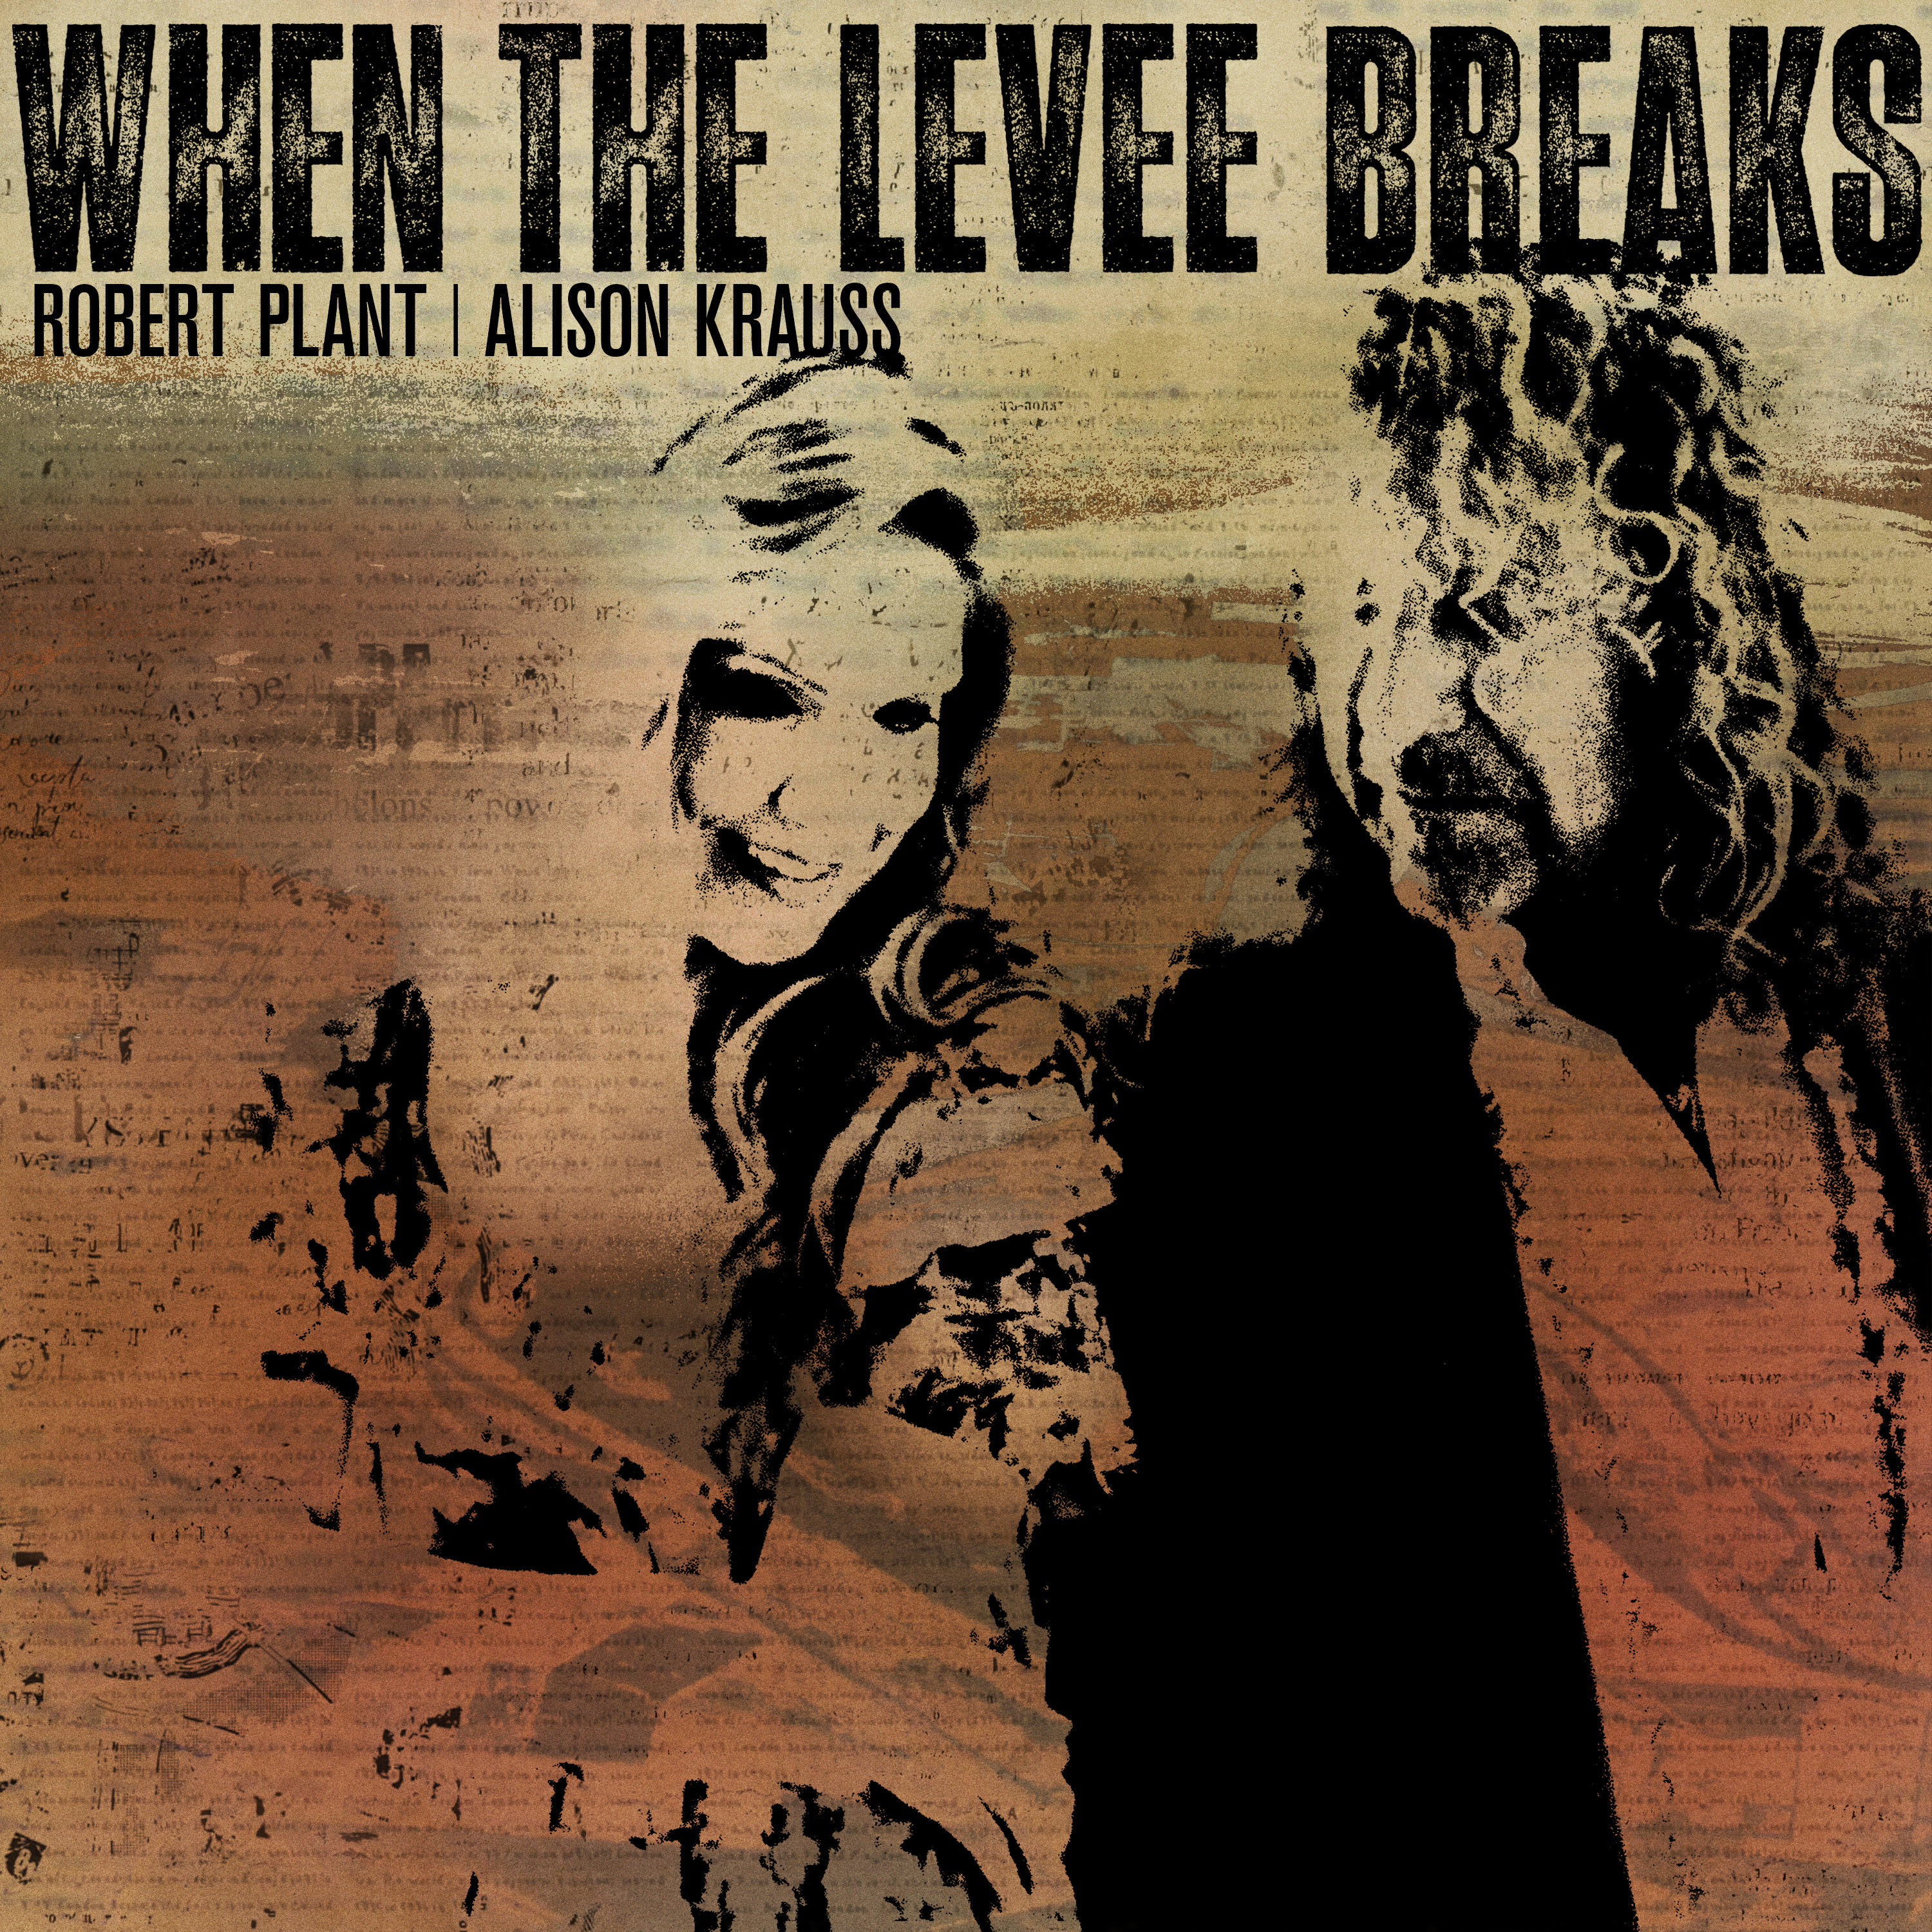 Robert Plant & Alison Krauss Release "When The Levee Breaks" | Summer Tour Underway